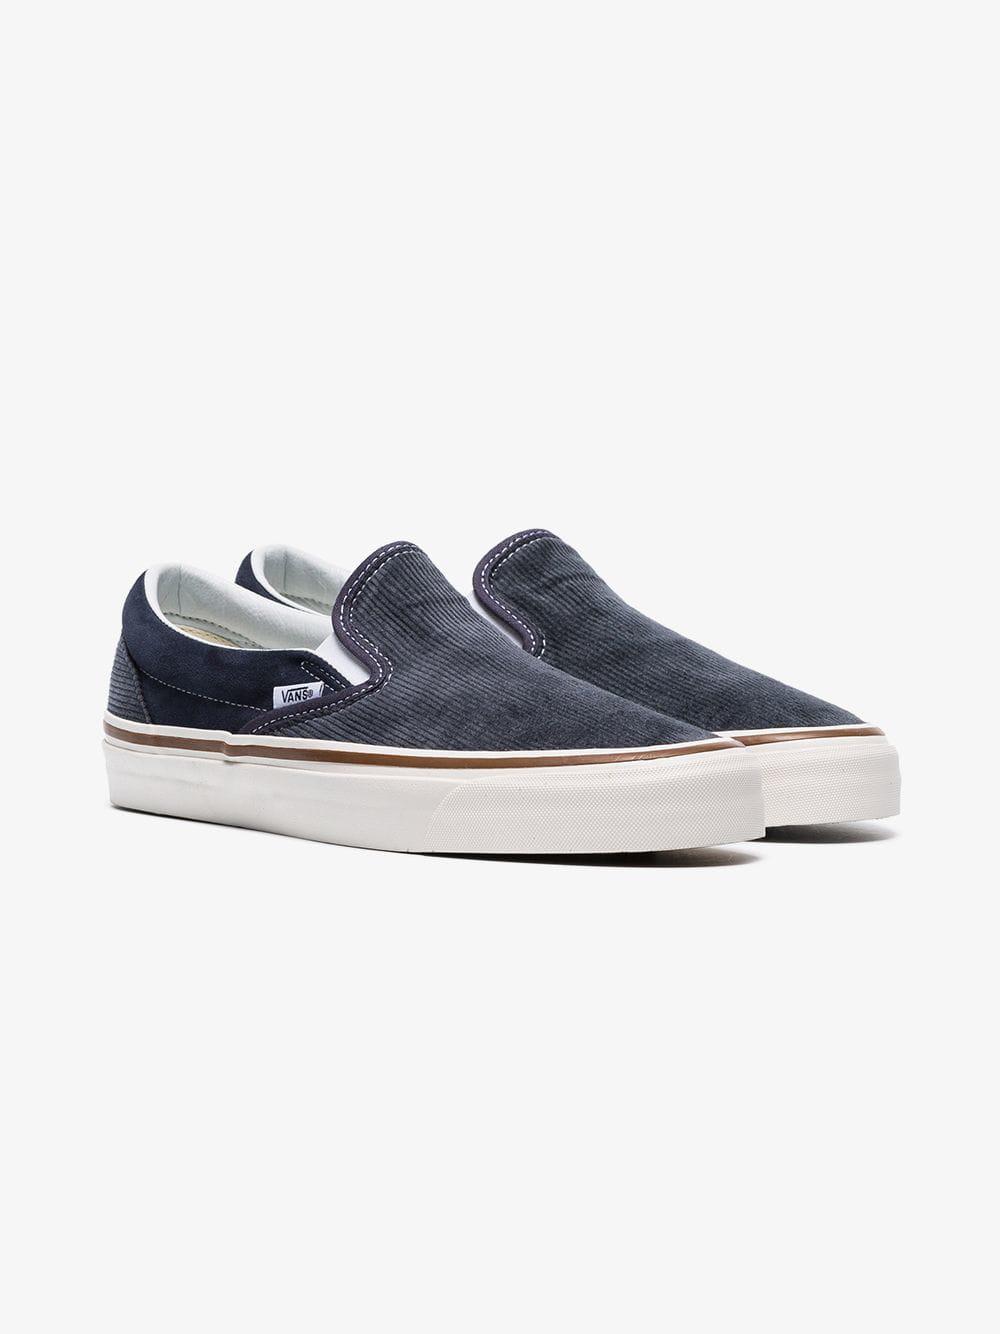 Vans Navy Blue And Grey 98 Dx Corduroy Slip On Sneakers for Men | Lyst